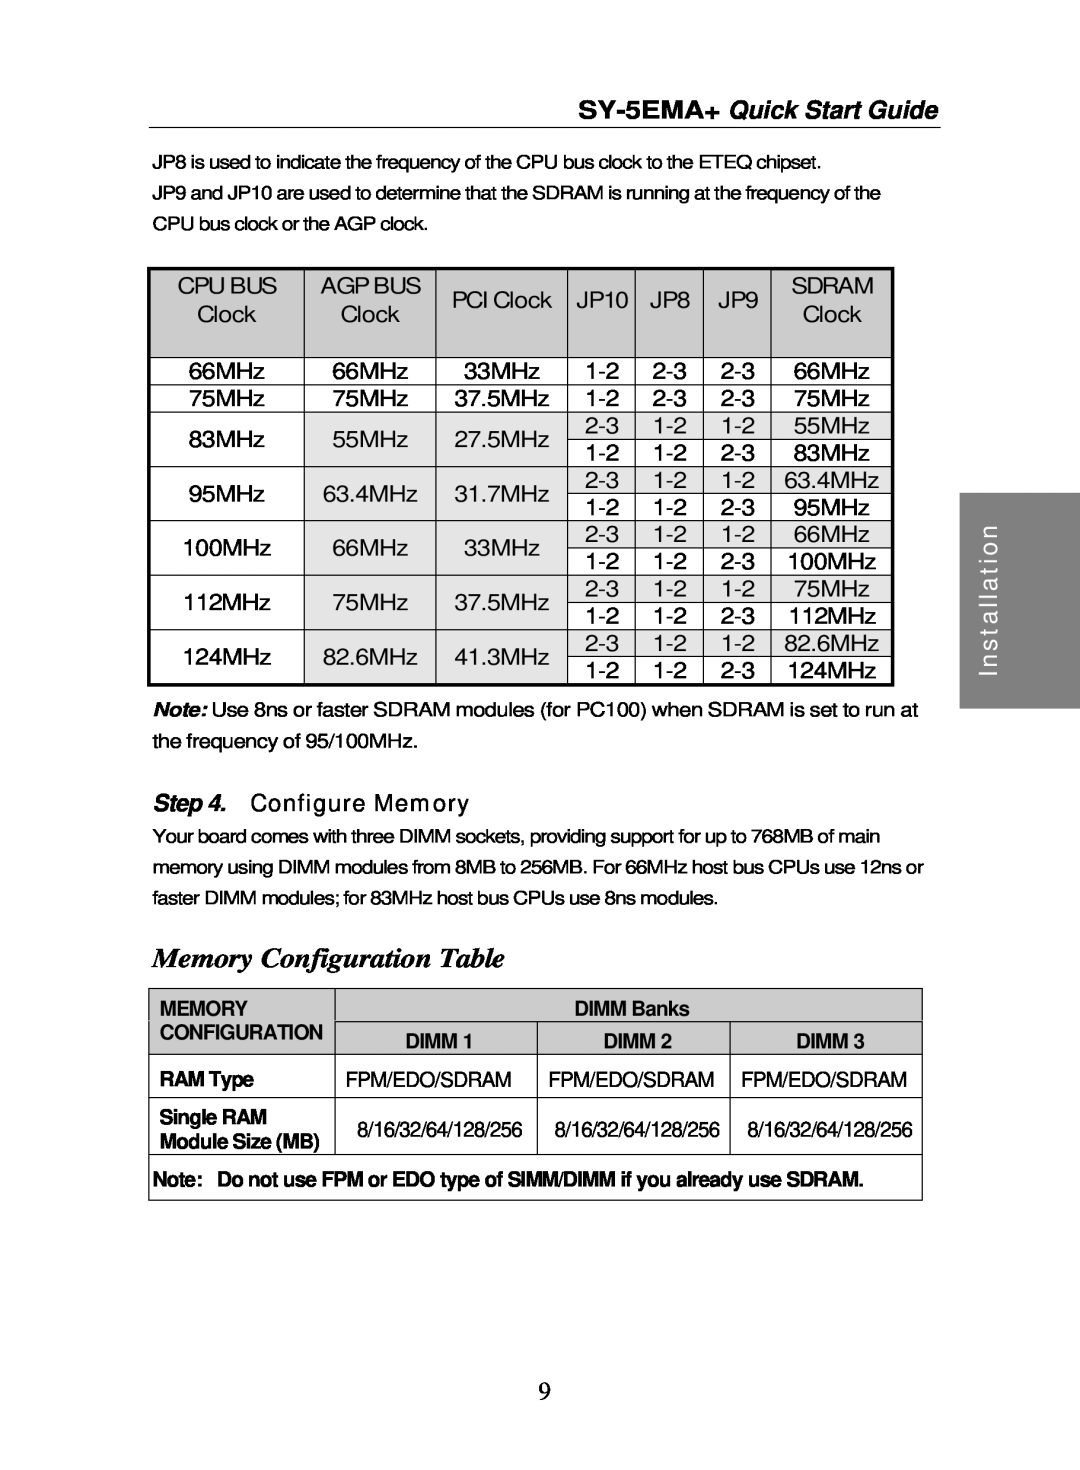 SOYO SY-5EMA+ quick start Memory Configuration Table, Cpu Bus, Agp Bus, PCI Clock, JP10, Sdram, Configure Memory 